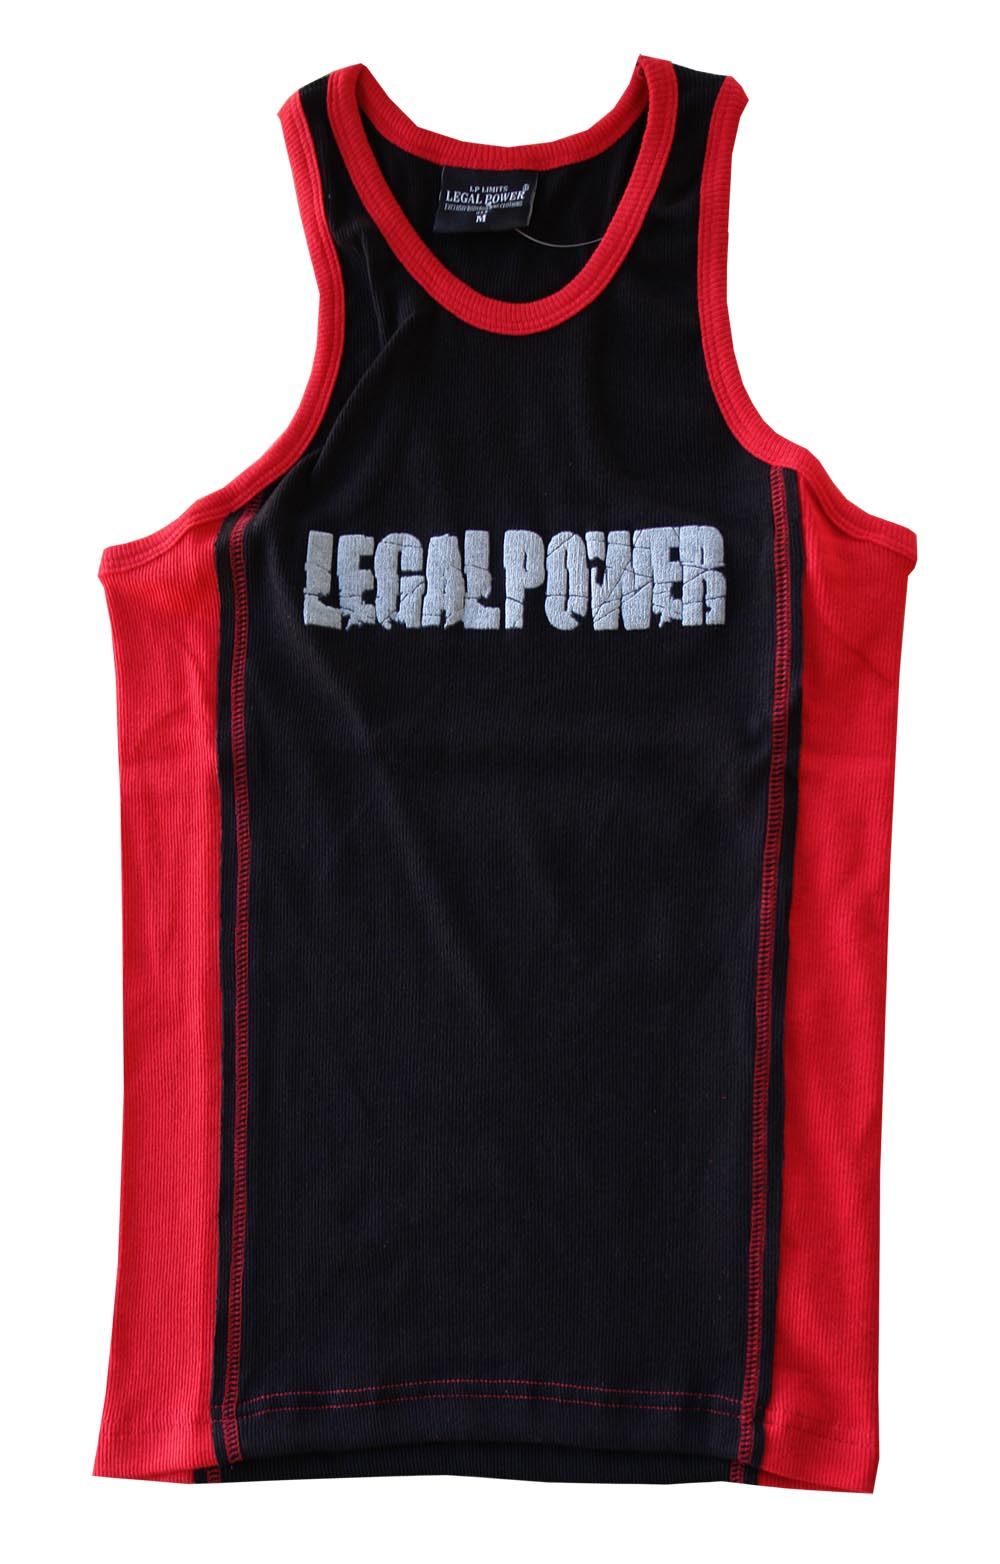 SALE Legal Power LP Limits Muscle Tank Top Eagle Baumwolle 9% Elasthan 2908-101 